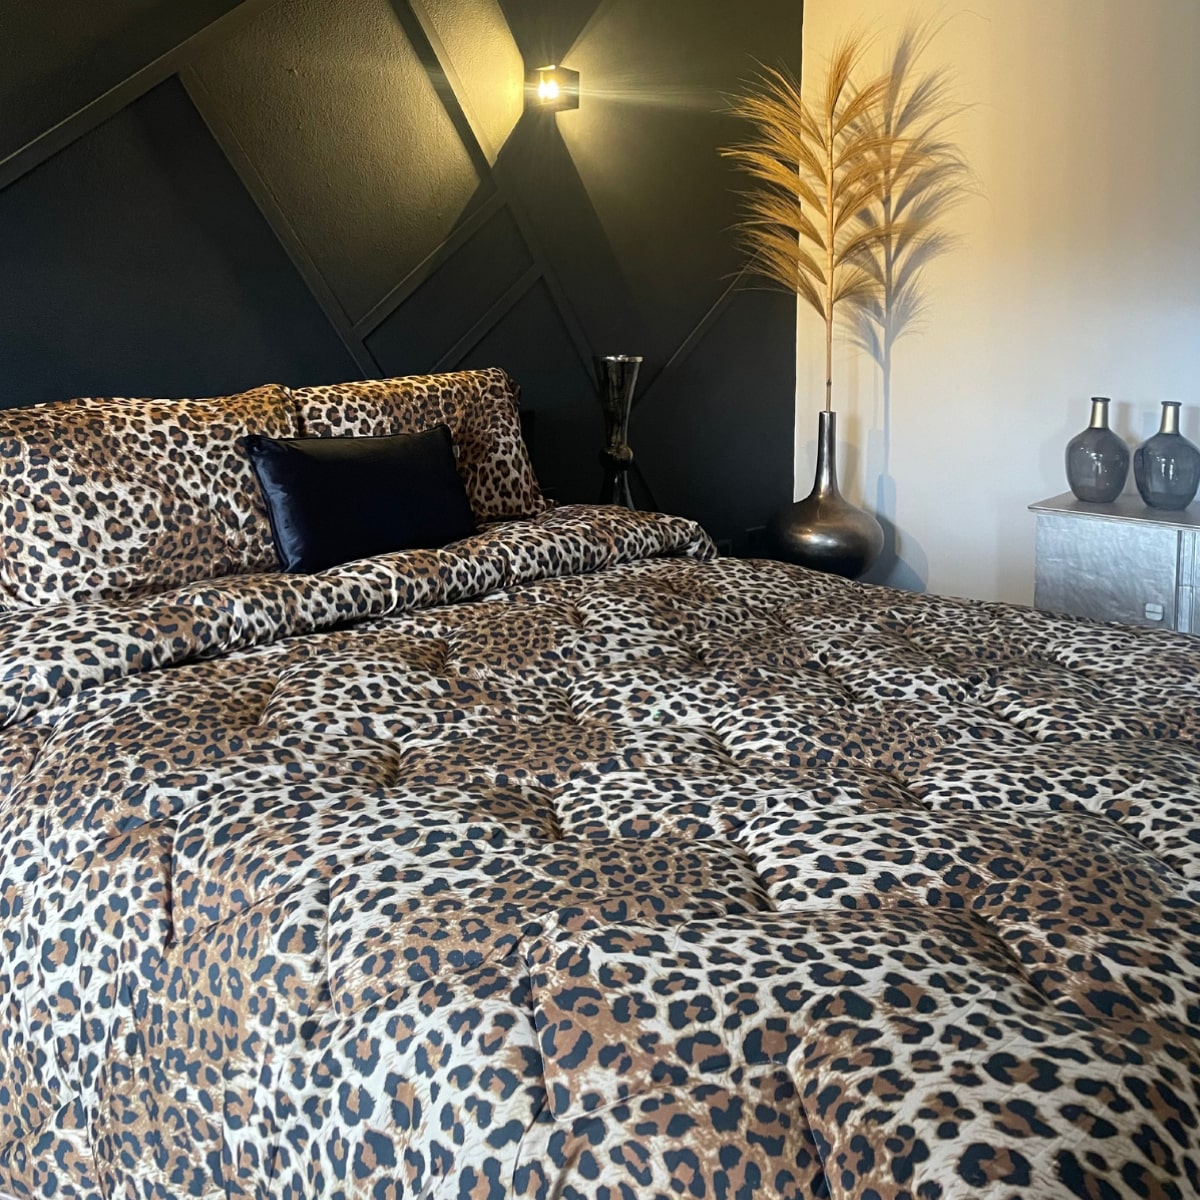 Zelesta Wonderbed Jaguar Skin Leopard Print Motiv Bettdecke fur Gastezimmer